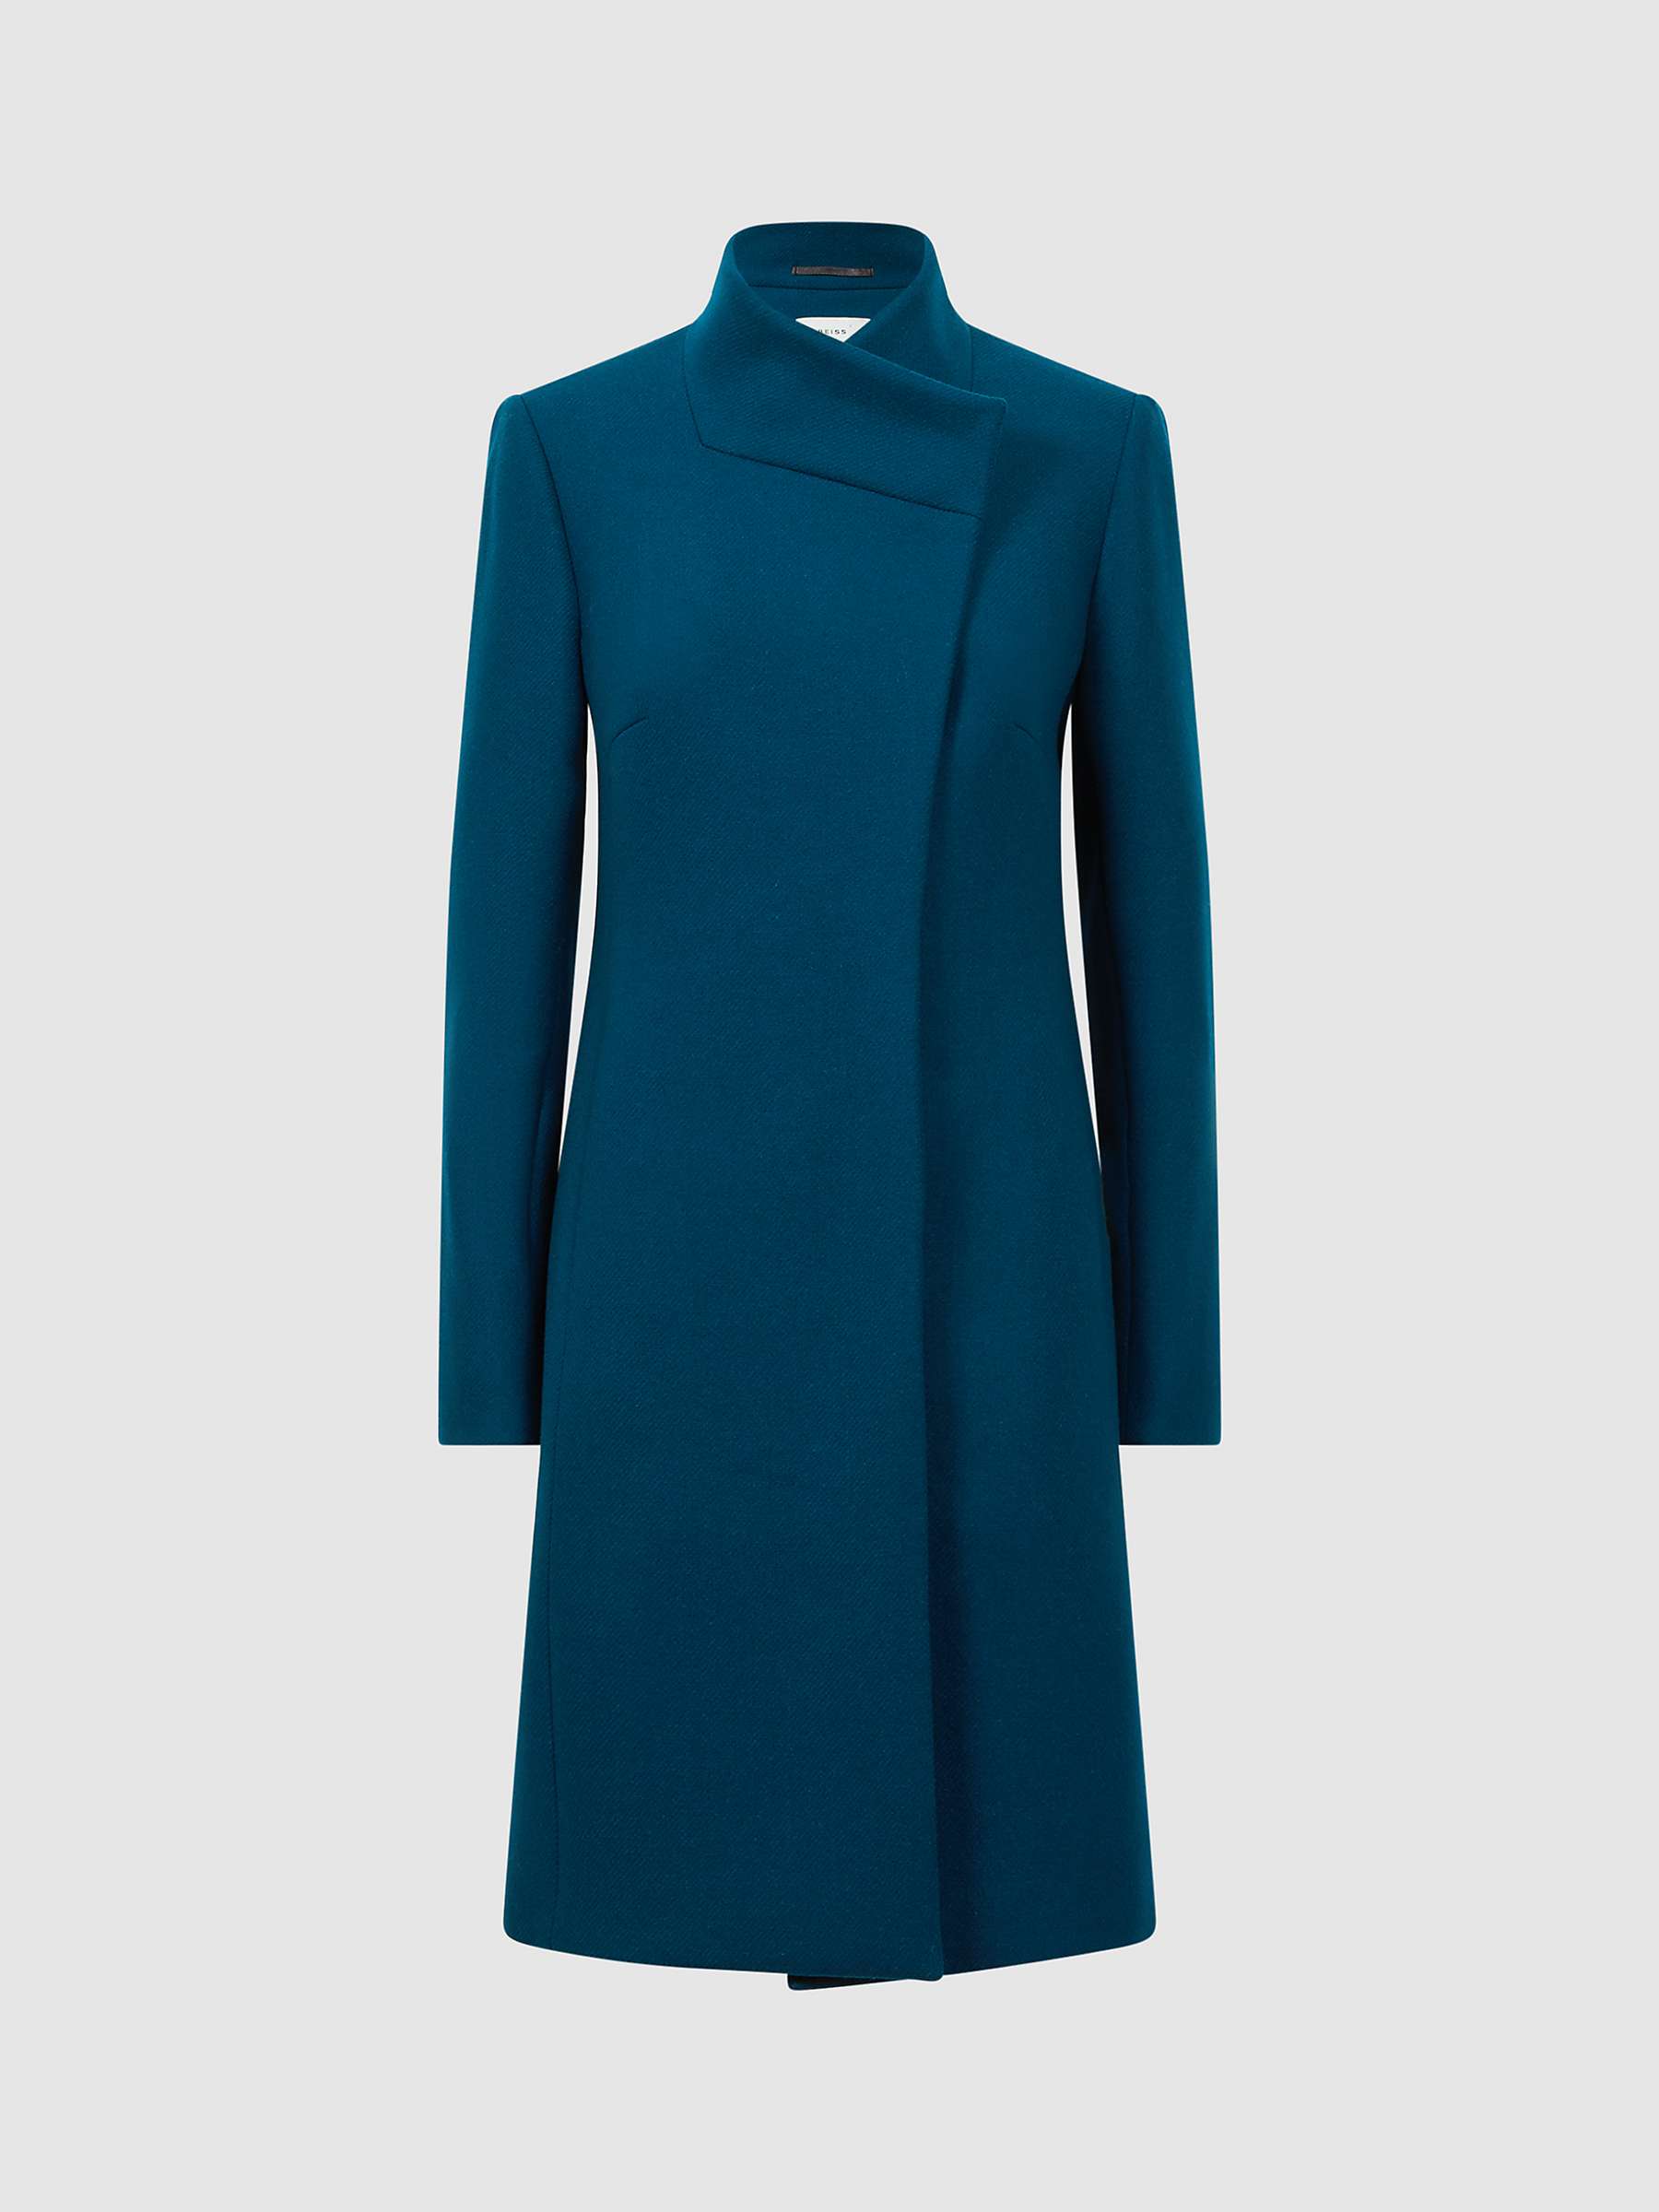 Buy Reiss Mia Wool Blend Tailored Coat Online at johnlewis.com